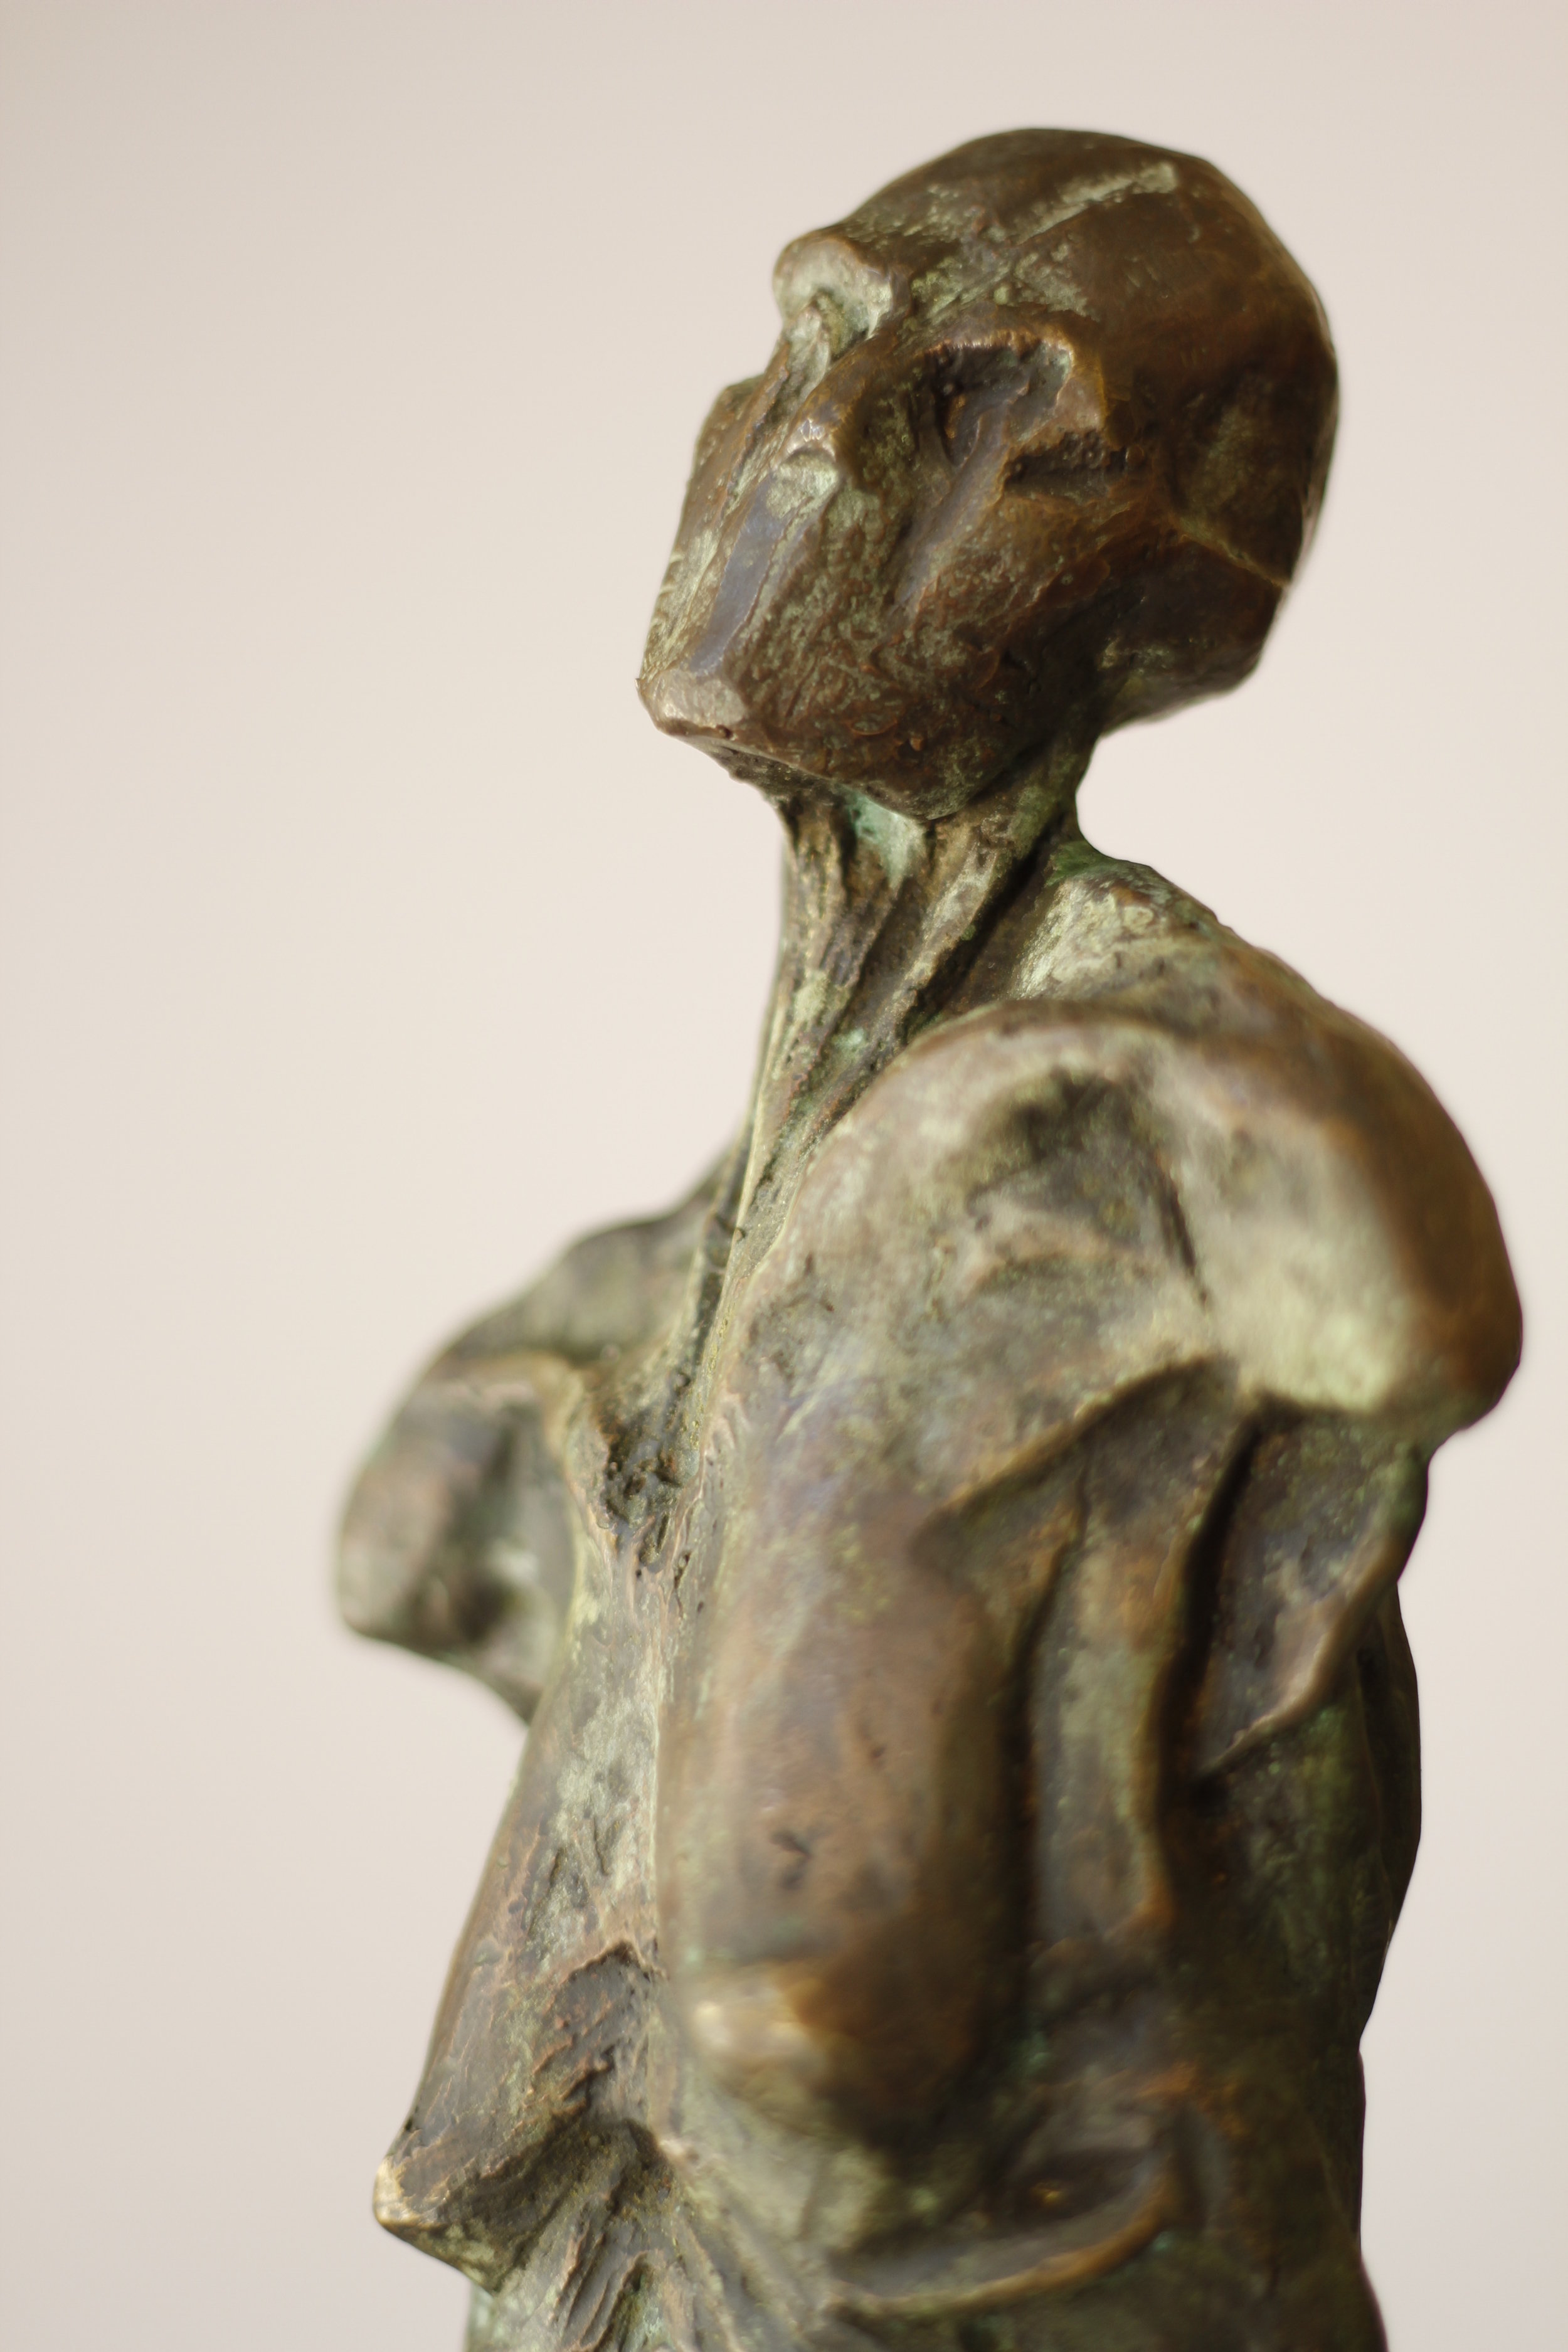   Untitled 2014, 80X20X10, Bronze statue by Mwafak Maklad (from Sweida born in 1988).&nbsp;Photo courtesy of ARA.  